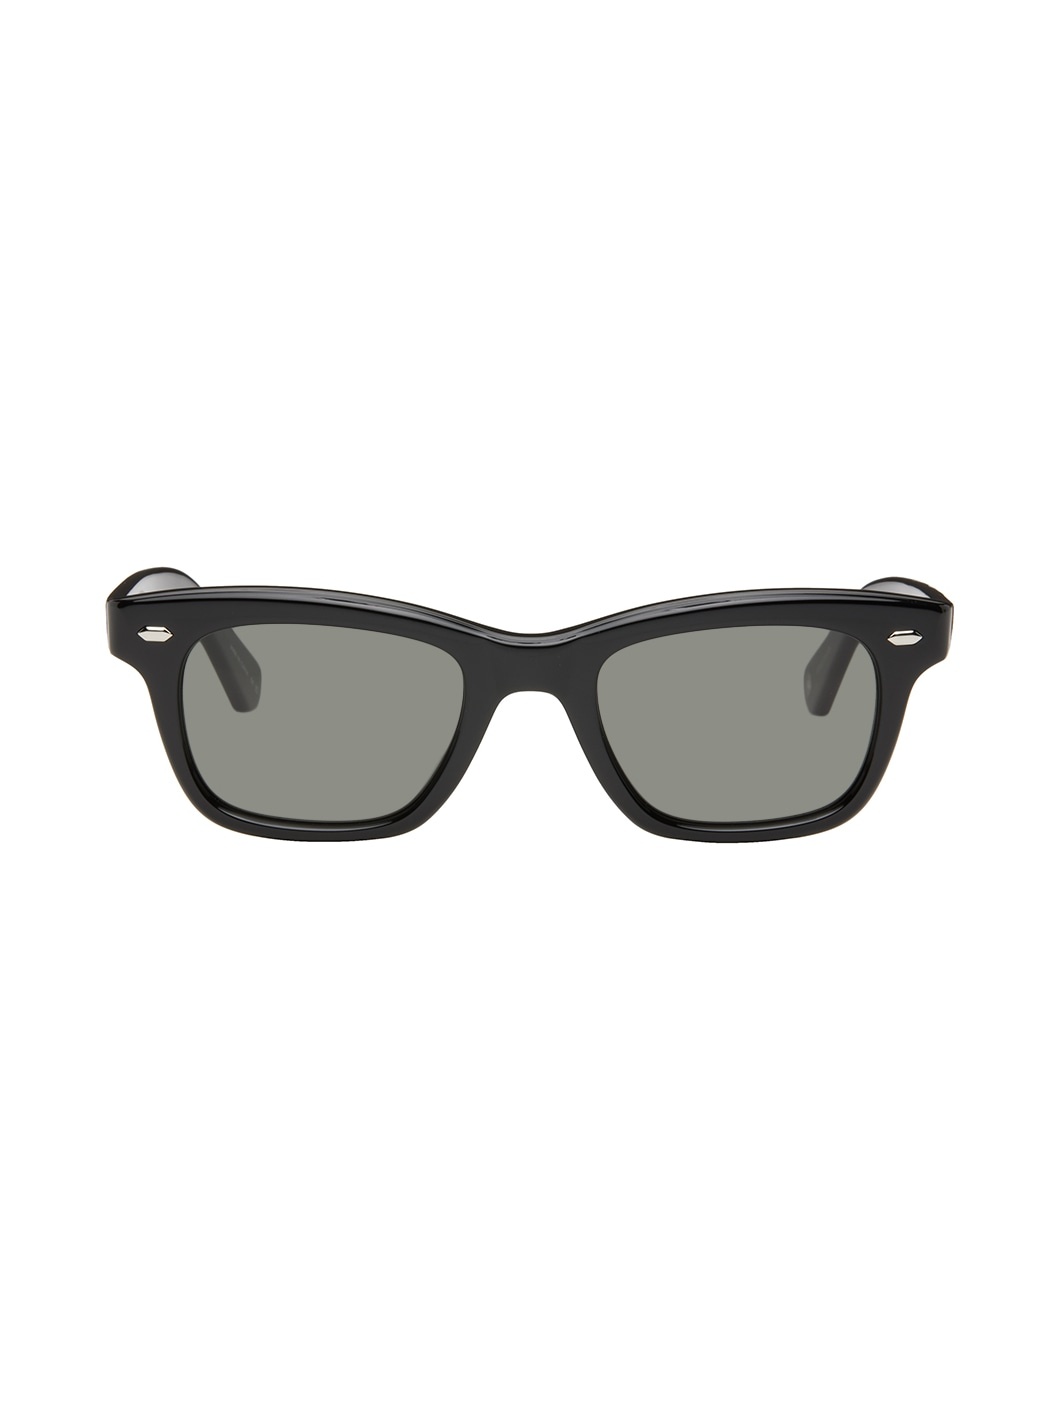 Black Grove Sunglasses - 1